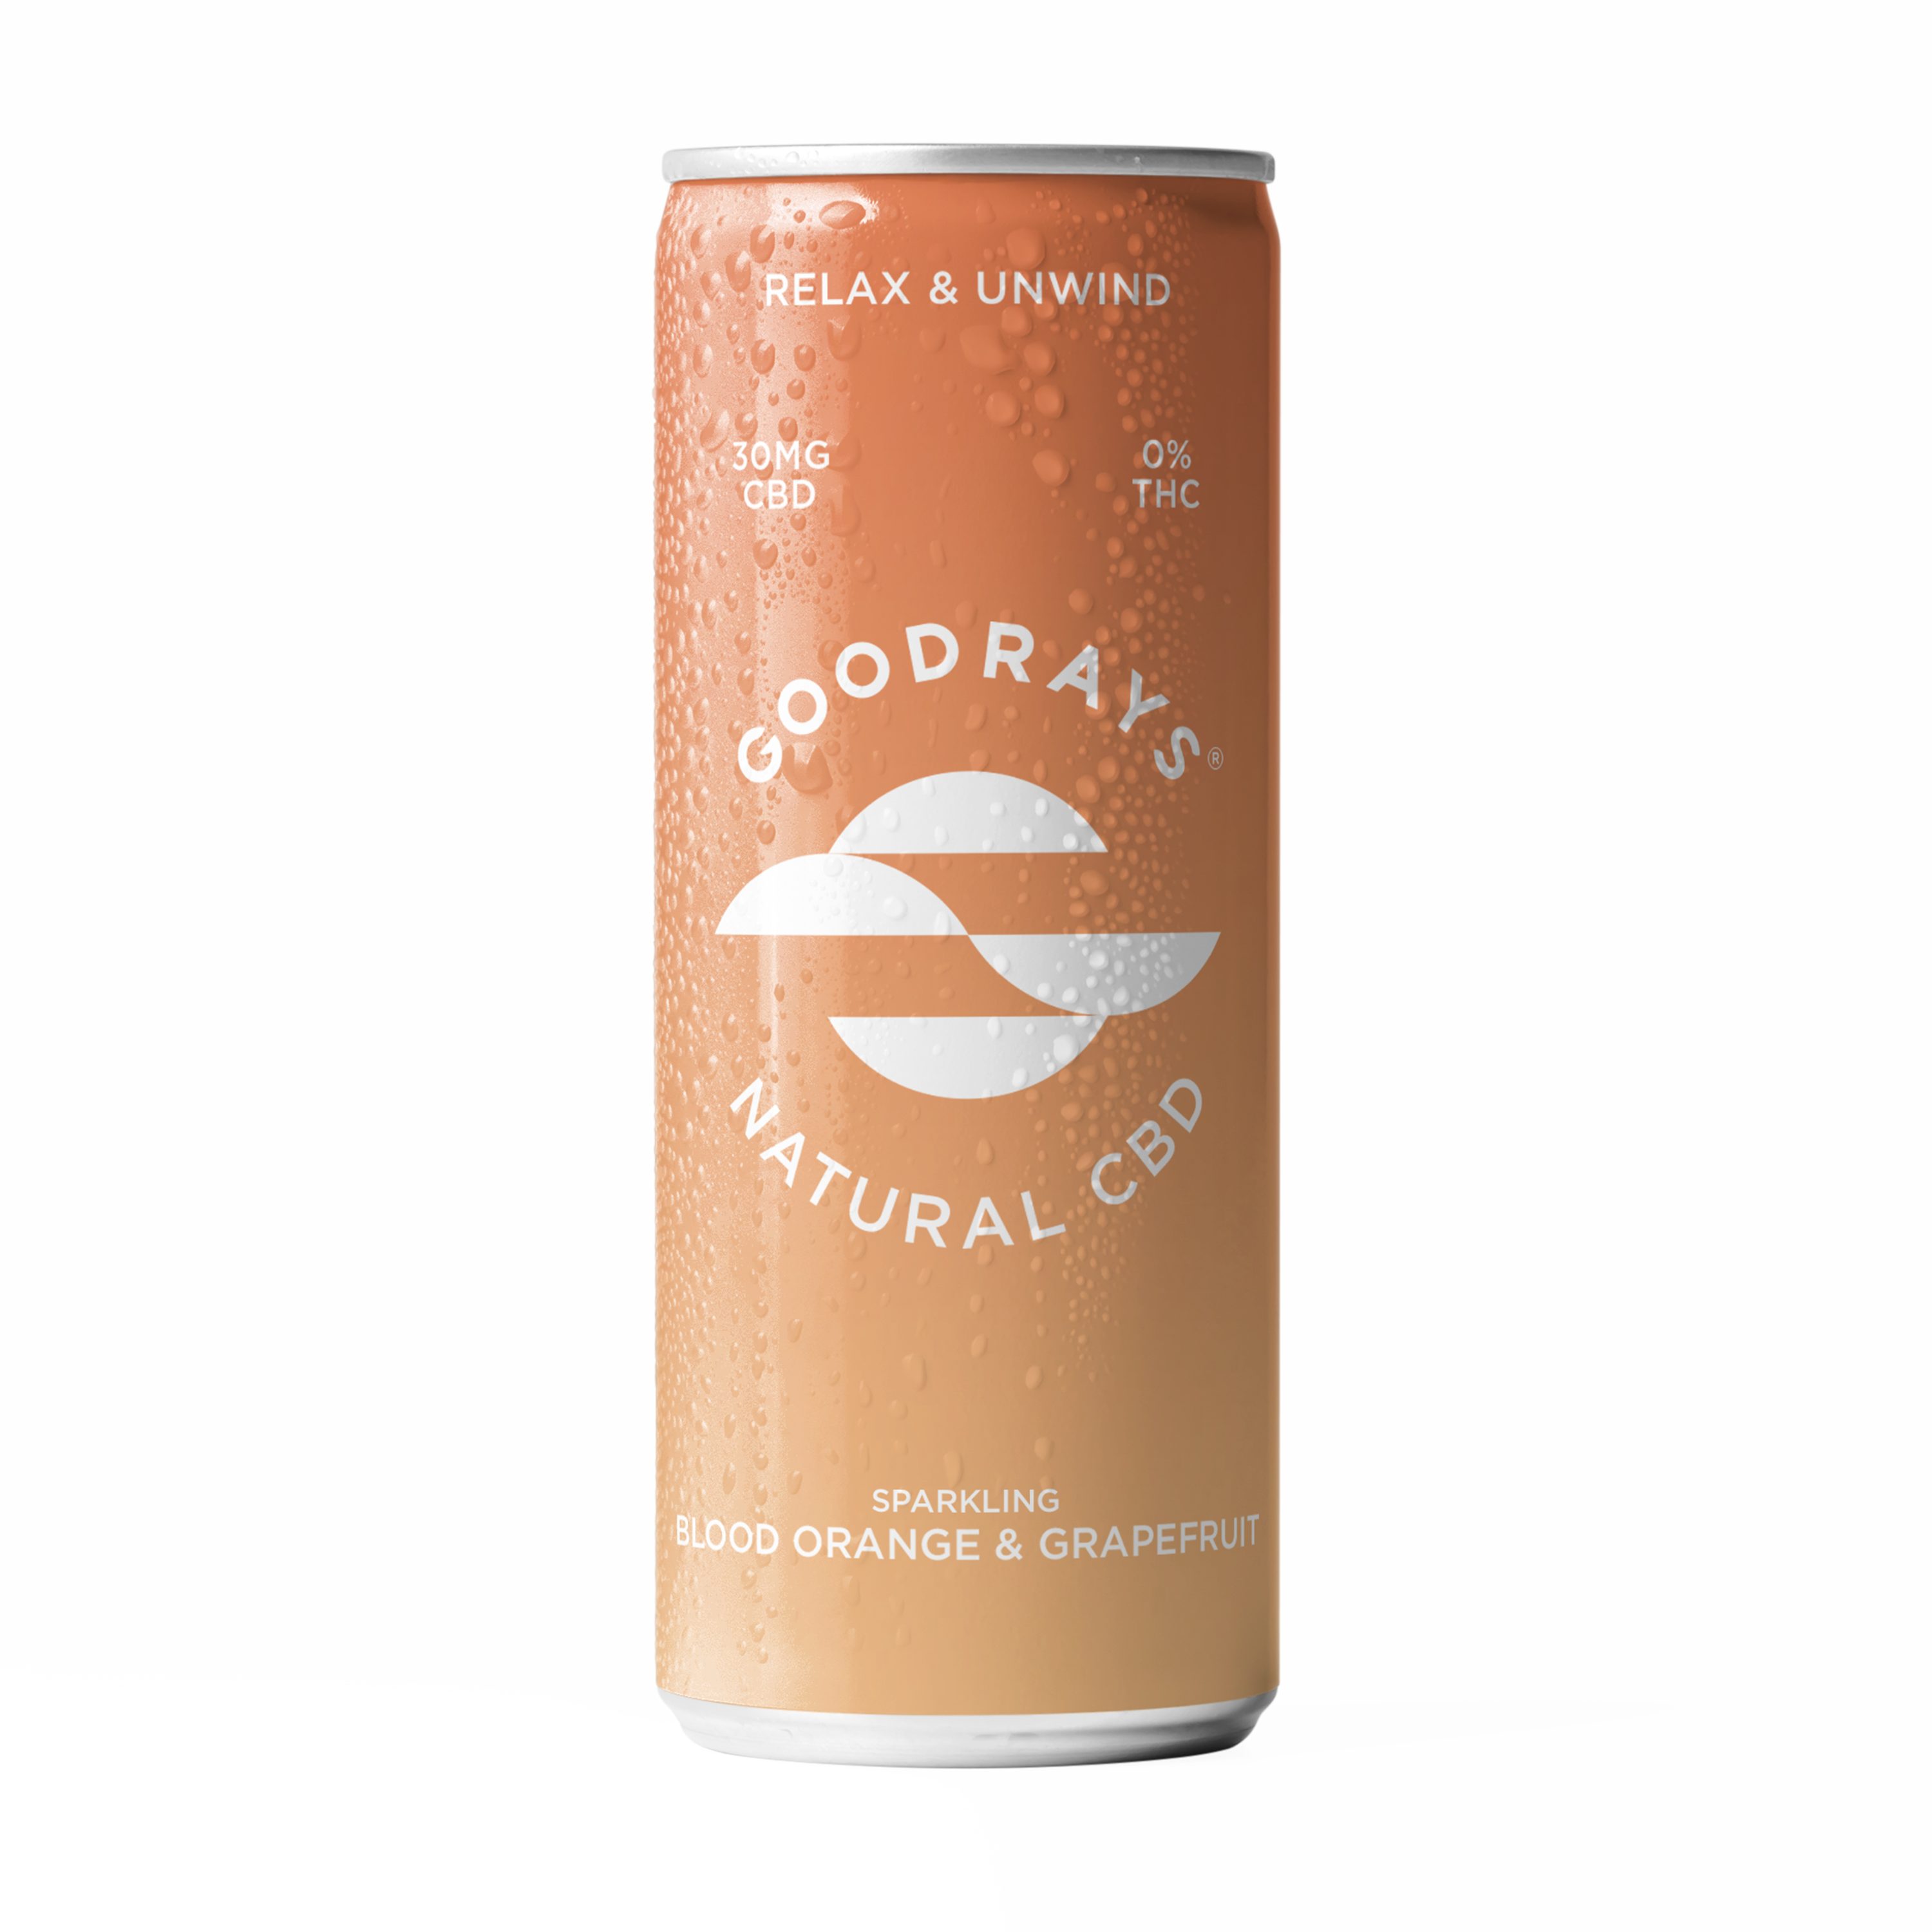 Goodrays 30mg CBD Blood Orange & Grapefruit Seltzer